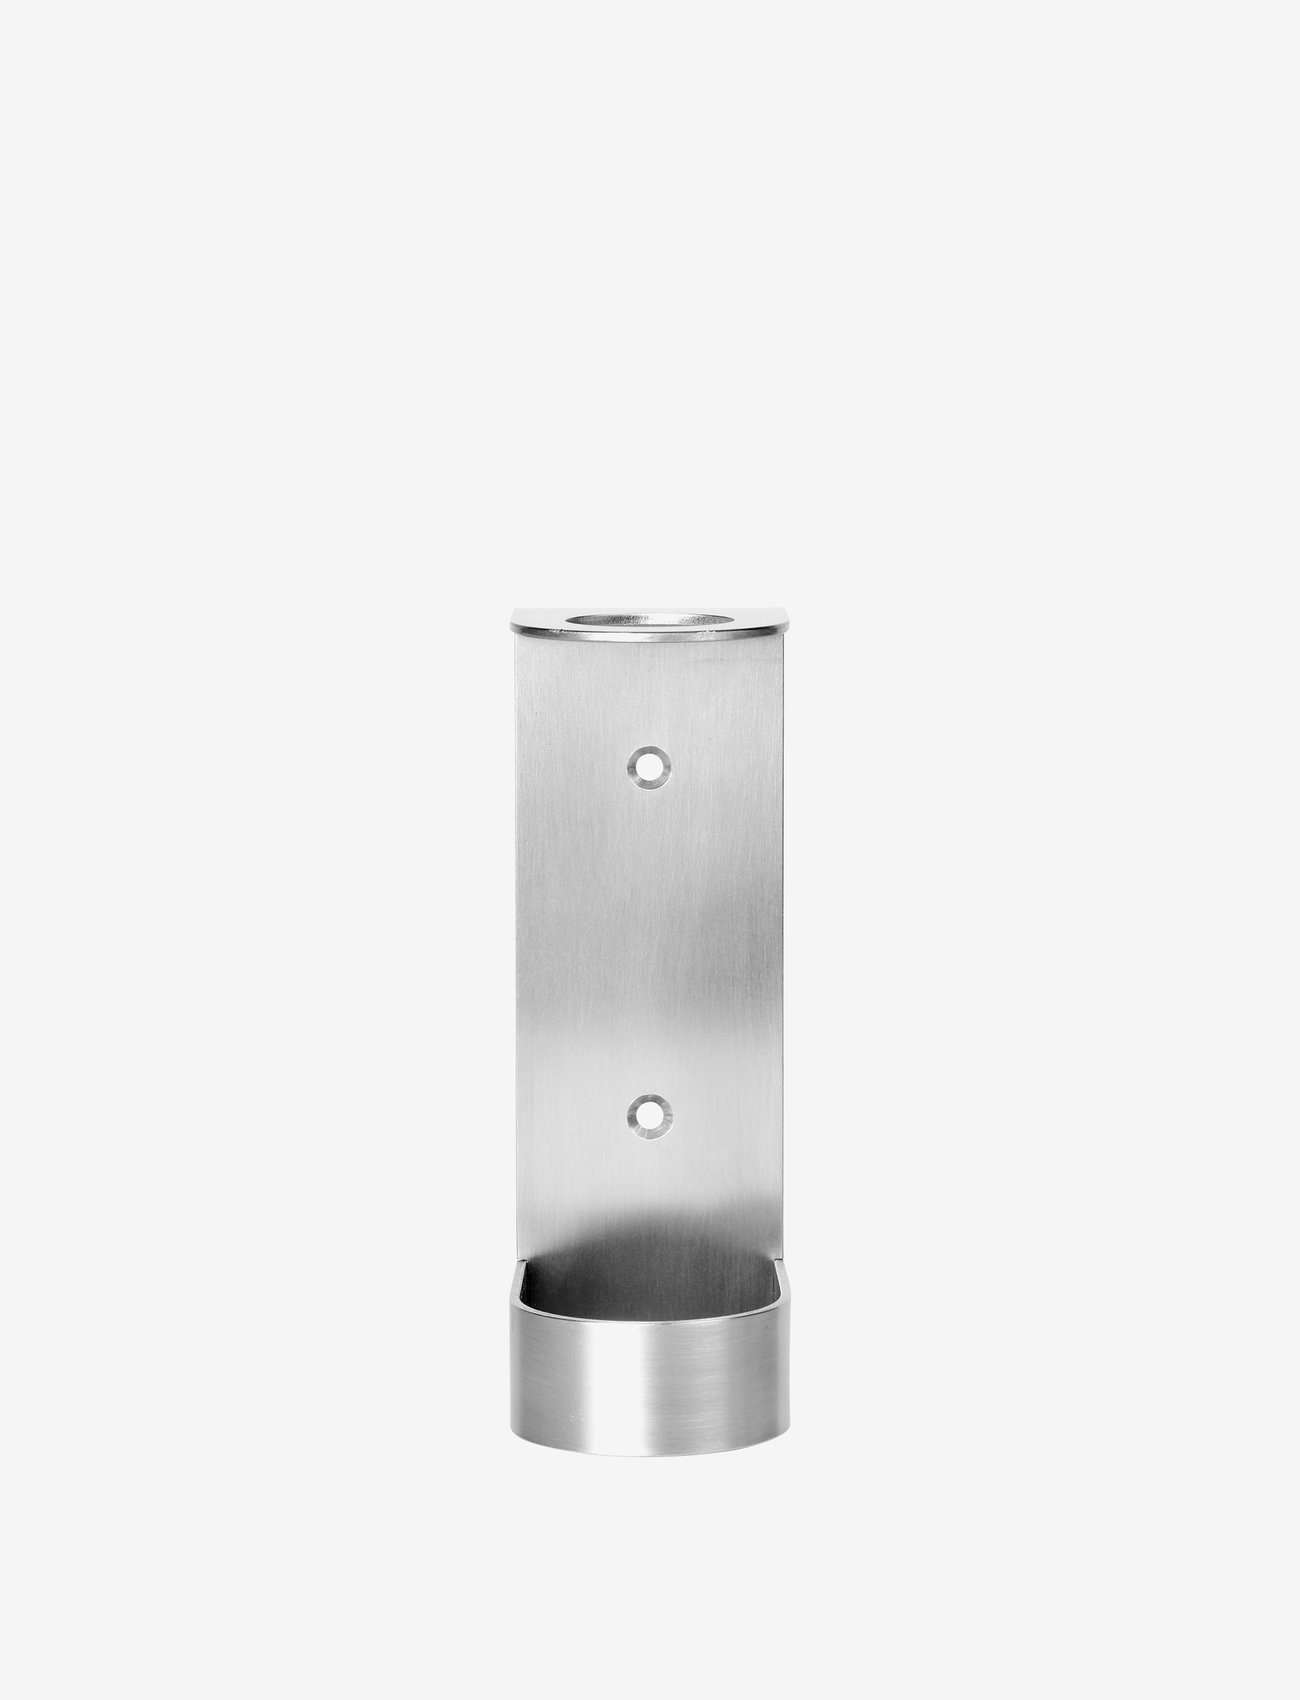 Kristina Dam Studio - Dowel Bottle Display - Hand Lotion - knager & knopper - stainless steel - 0